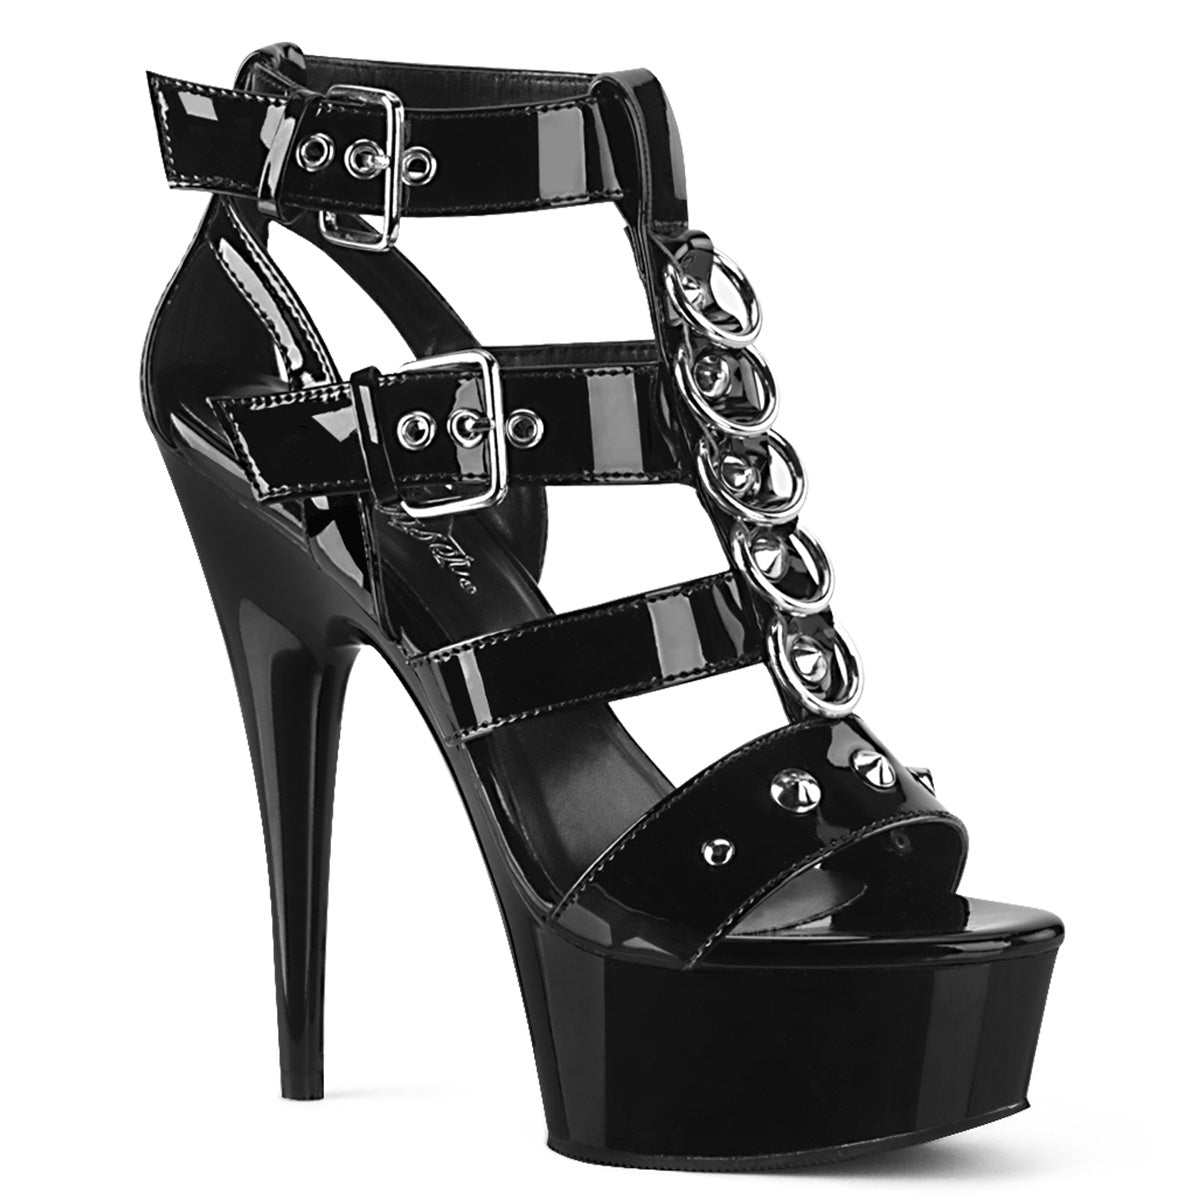 DELIGHT-658 6" Heel Black Patent  Stripper Platforms High Heels